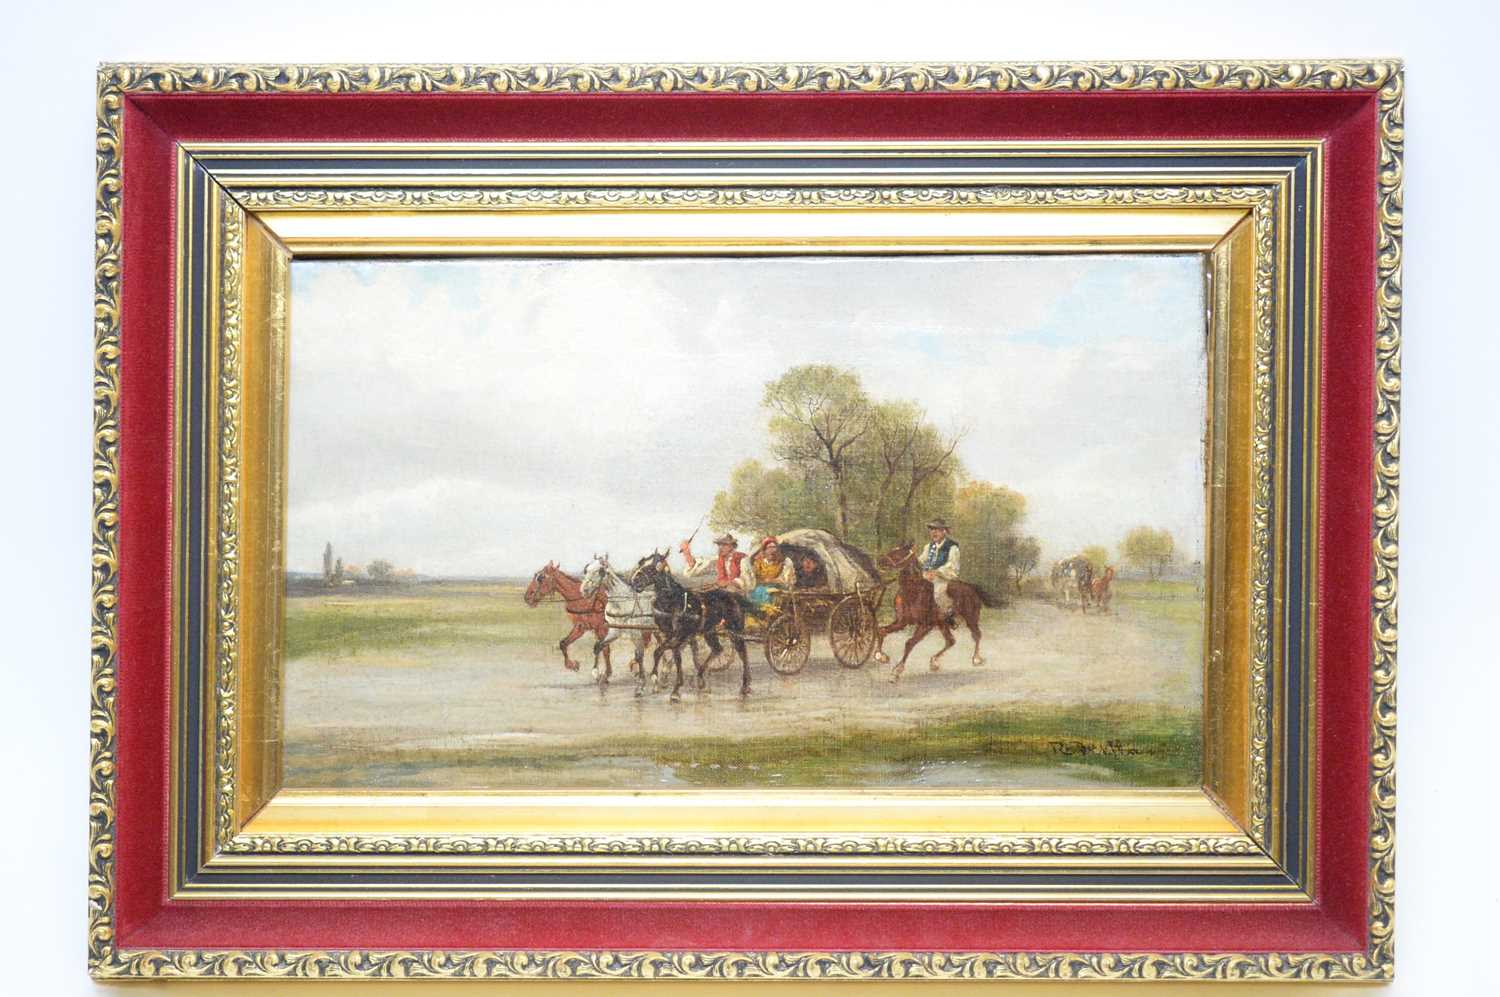 Lot 338 - British School late 19th Century - Oil on canvas